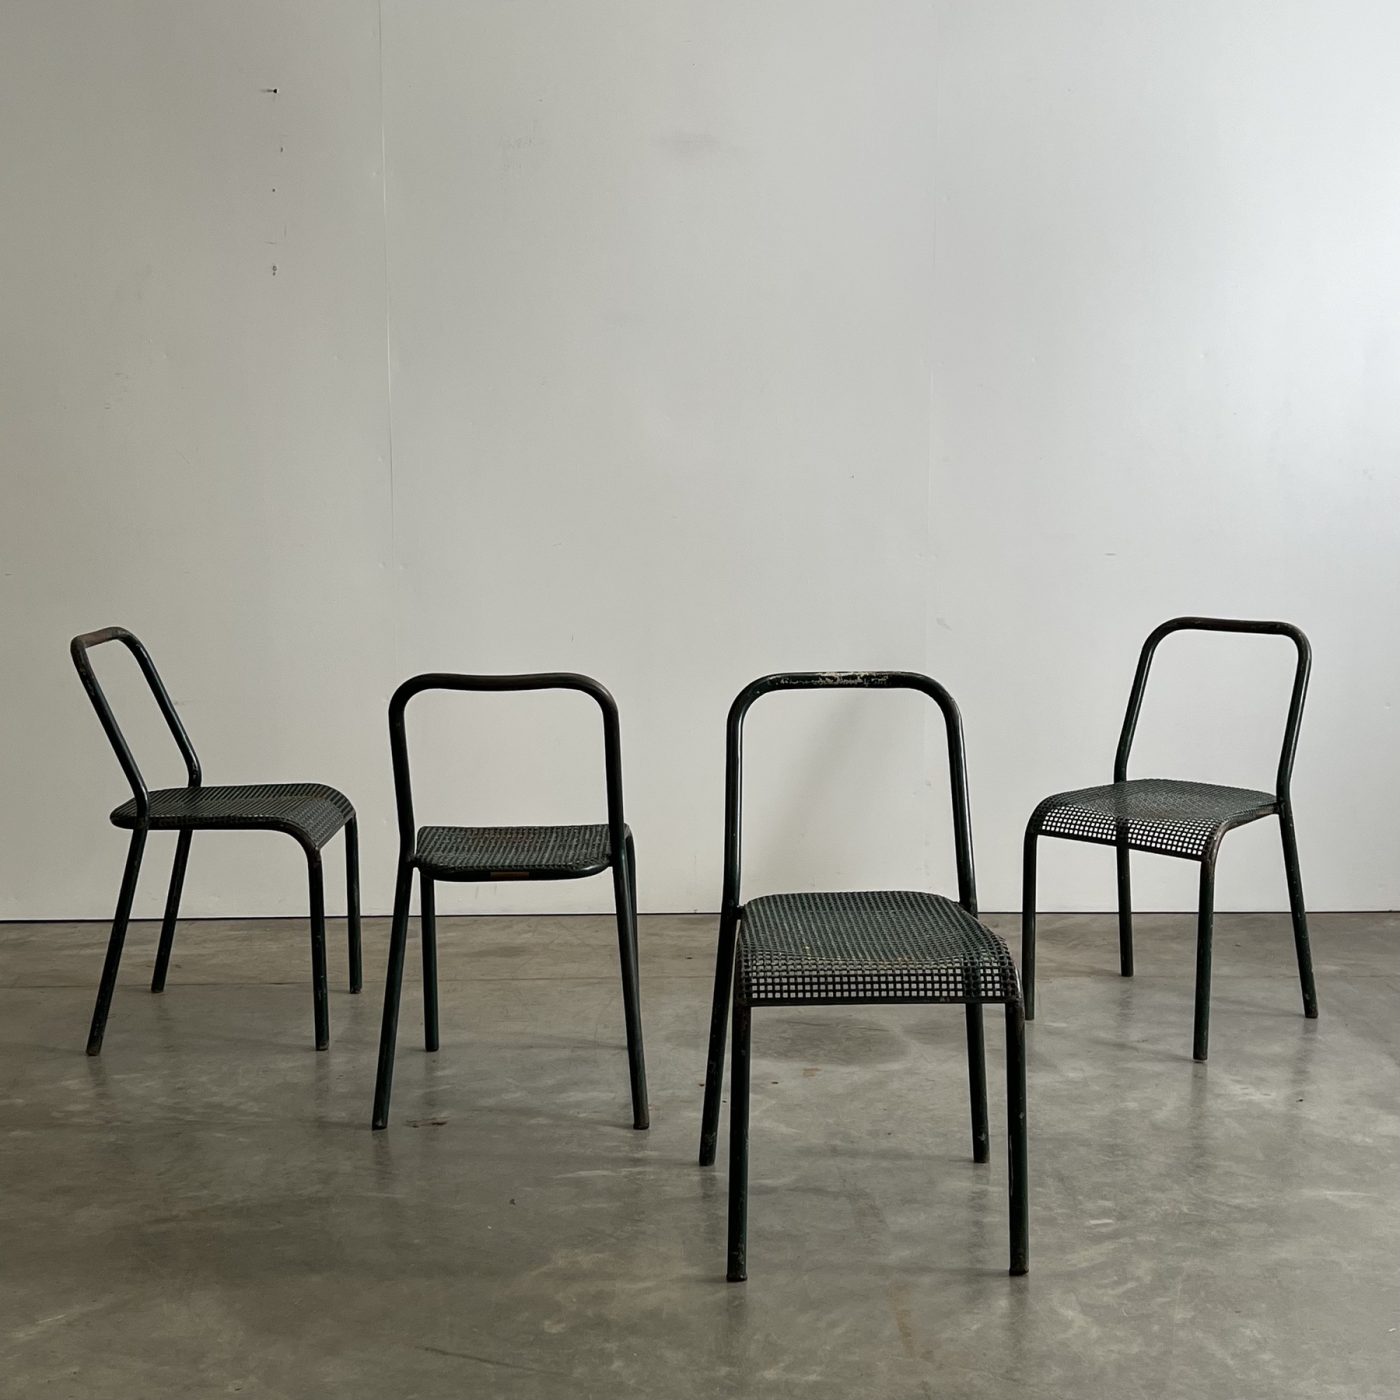 objet-vagabond-metal-chairs0000